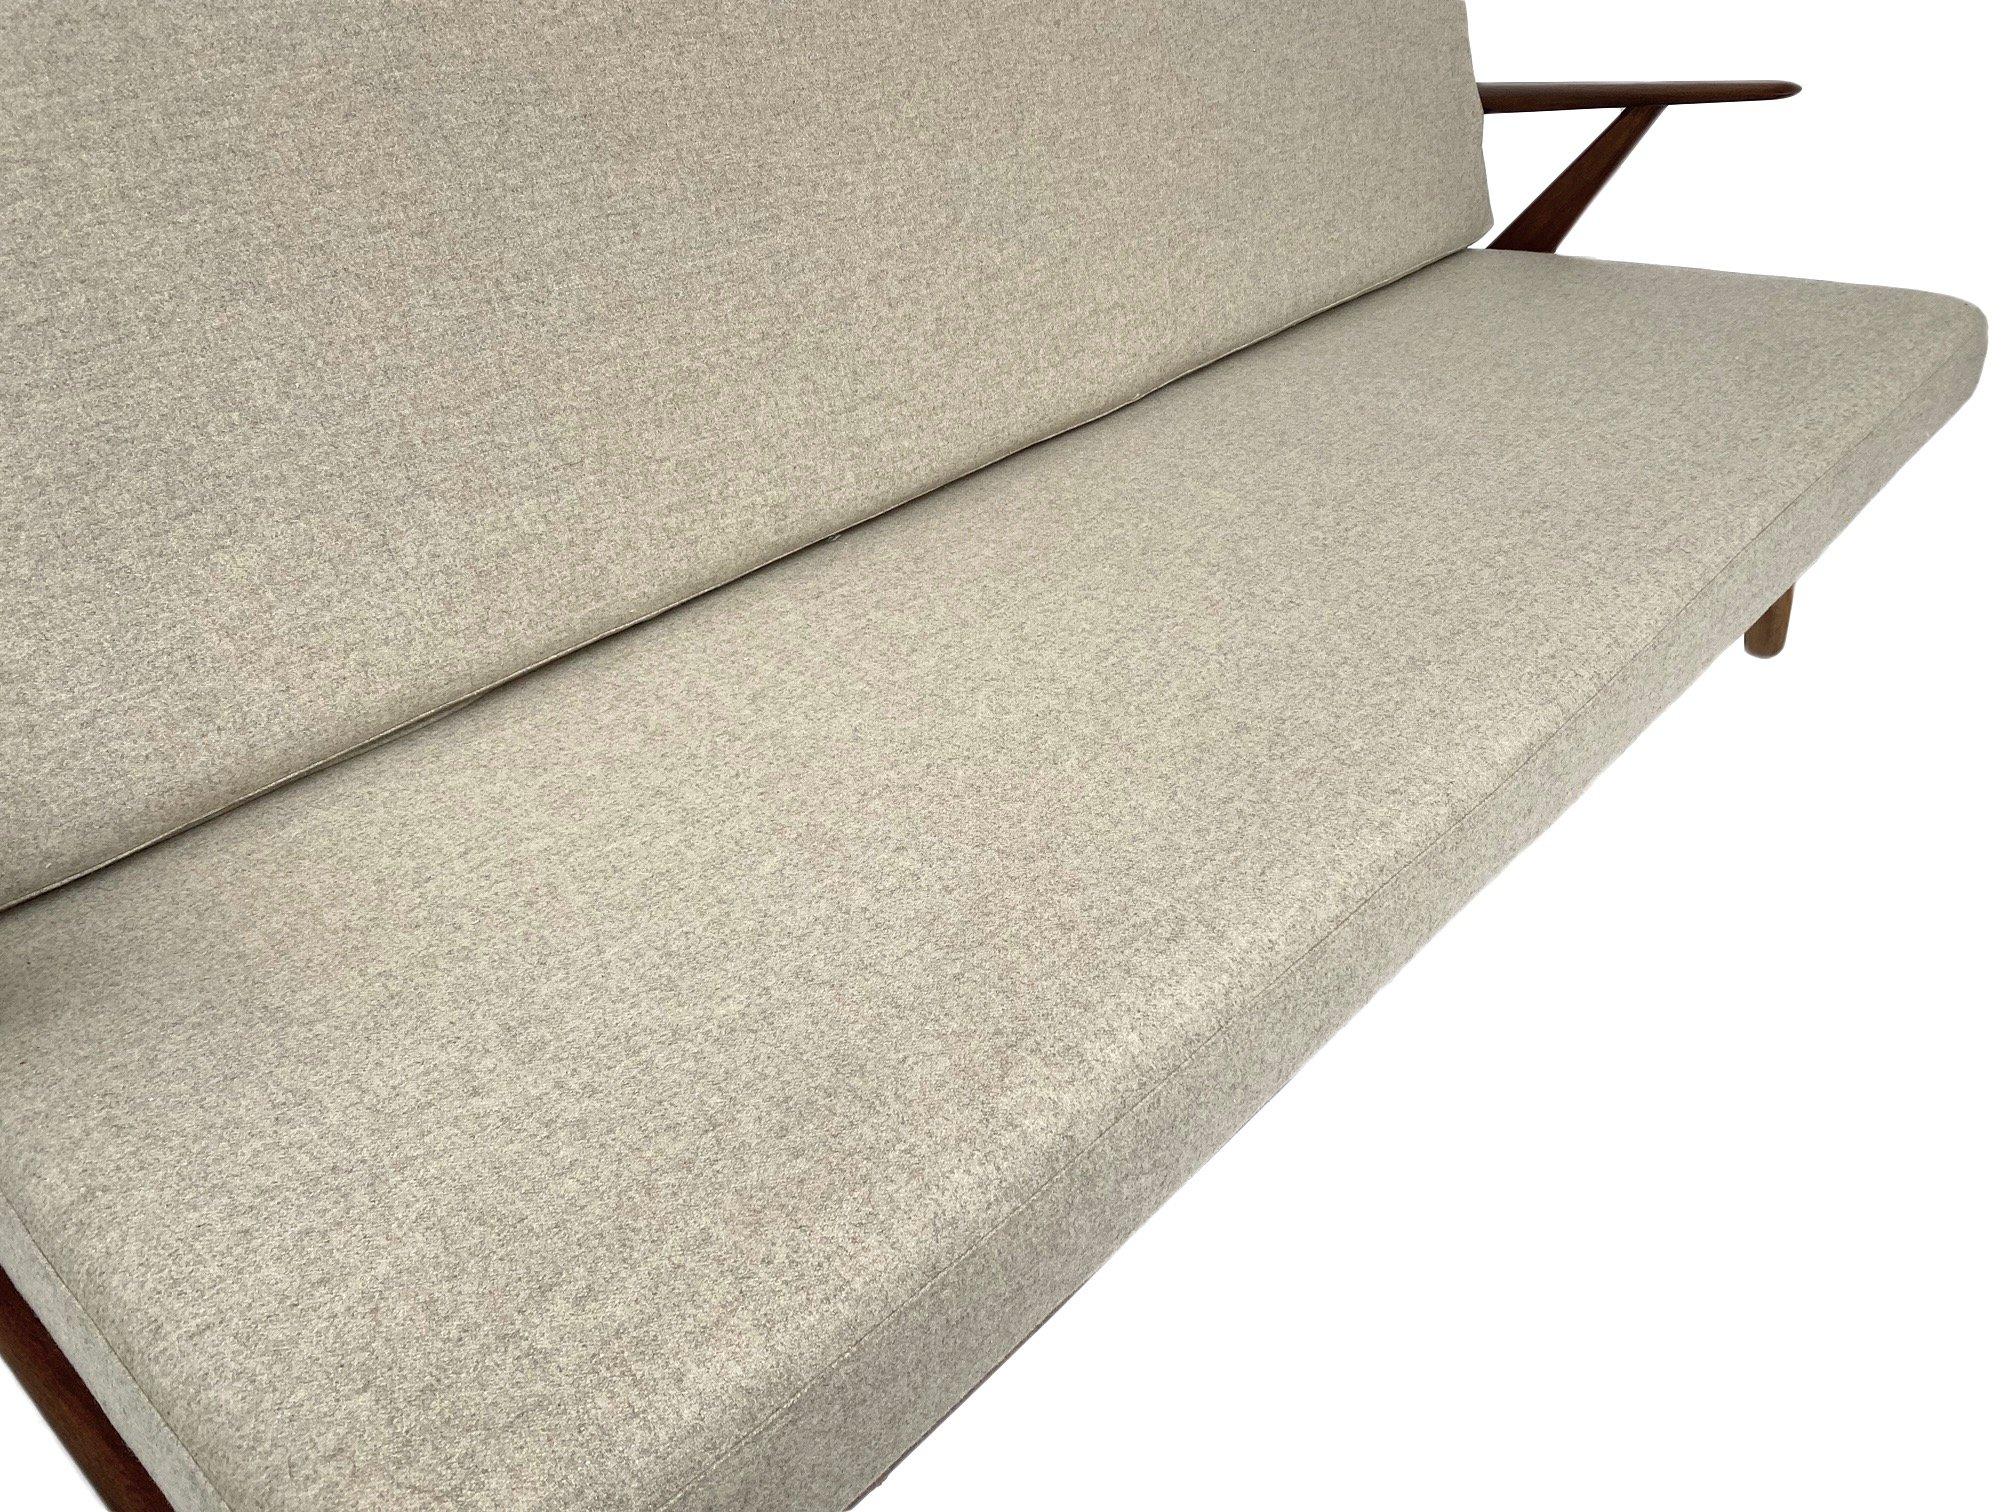 Ercol Cream Wool and Teak 3 Seater Sofa 2